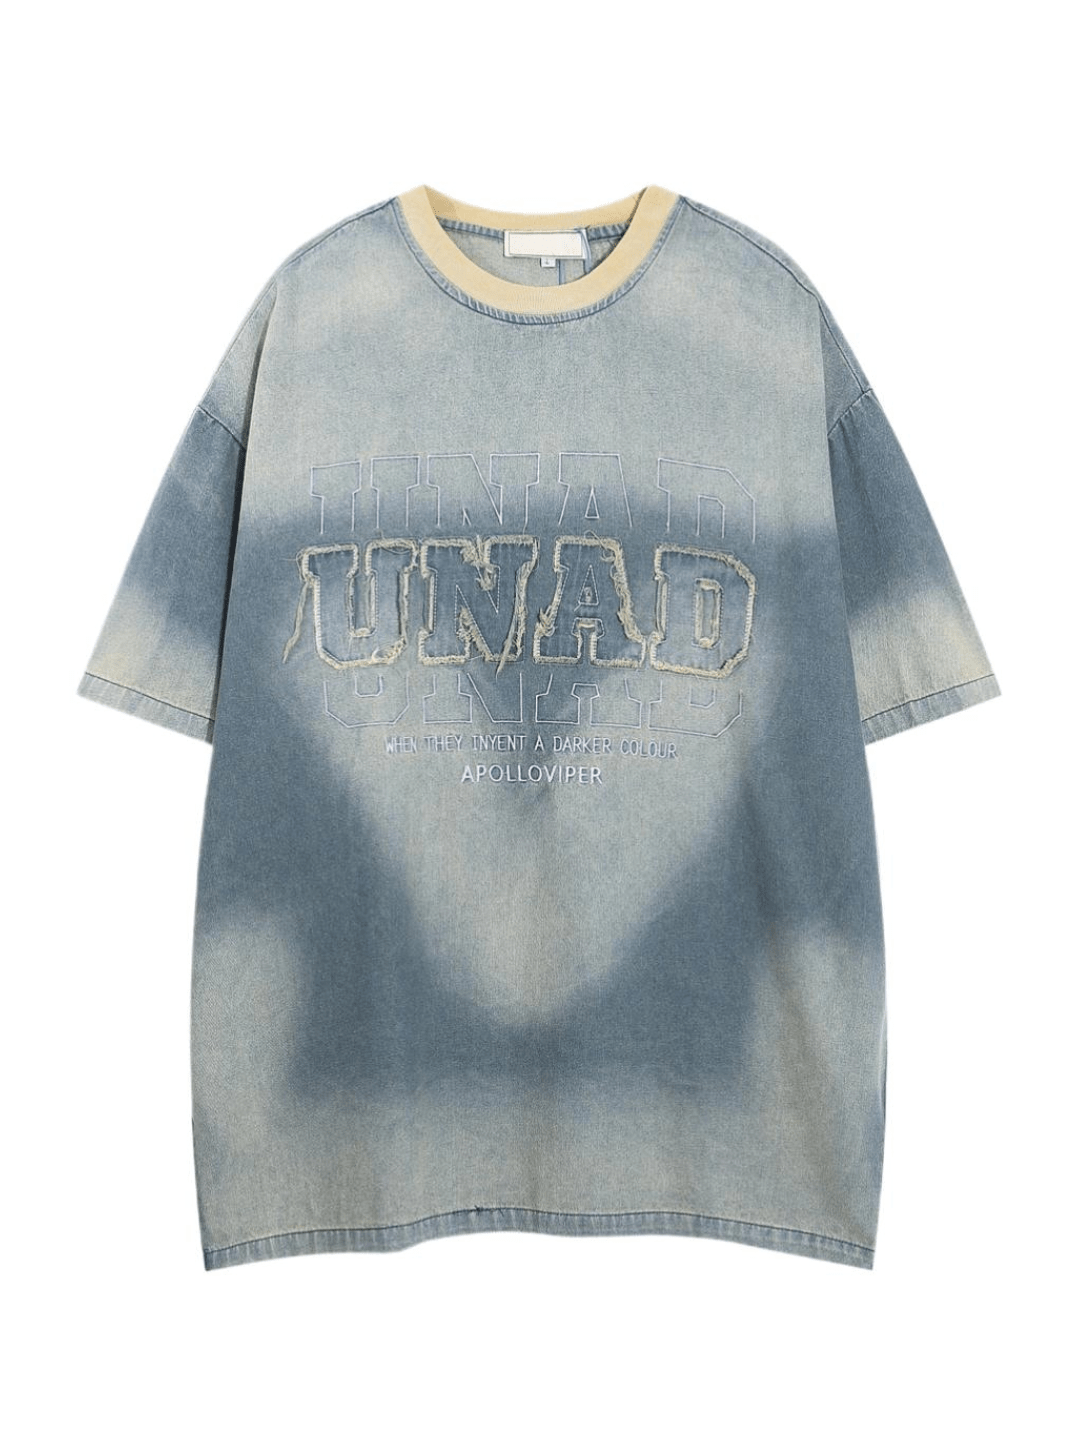 [Mz] Retro Tie-Dye Vintage Patch Embroidery T-Shirt na1175